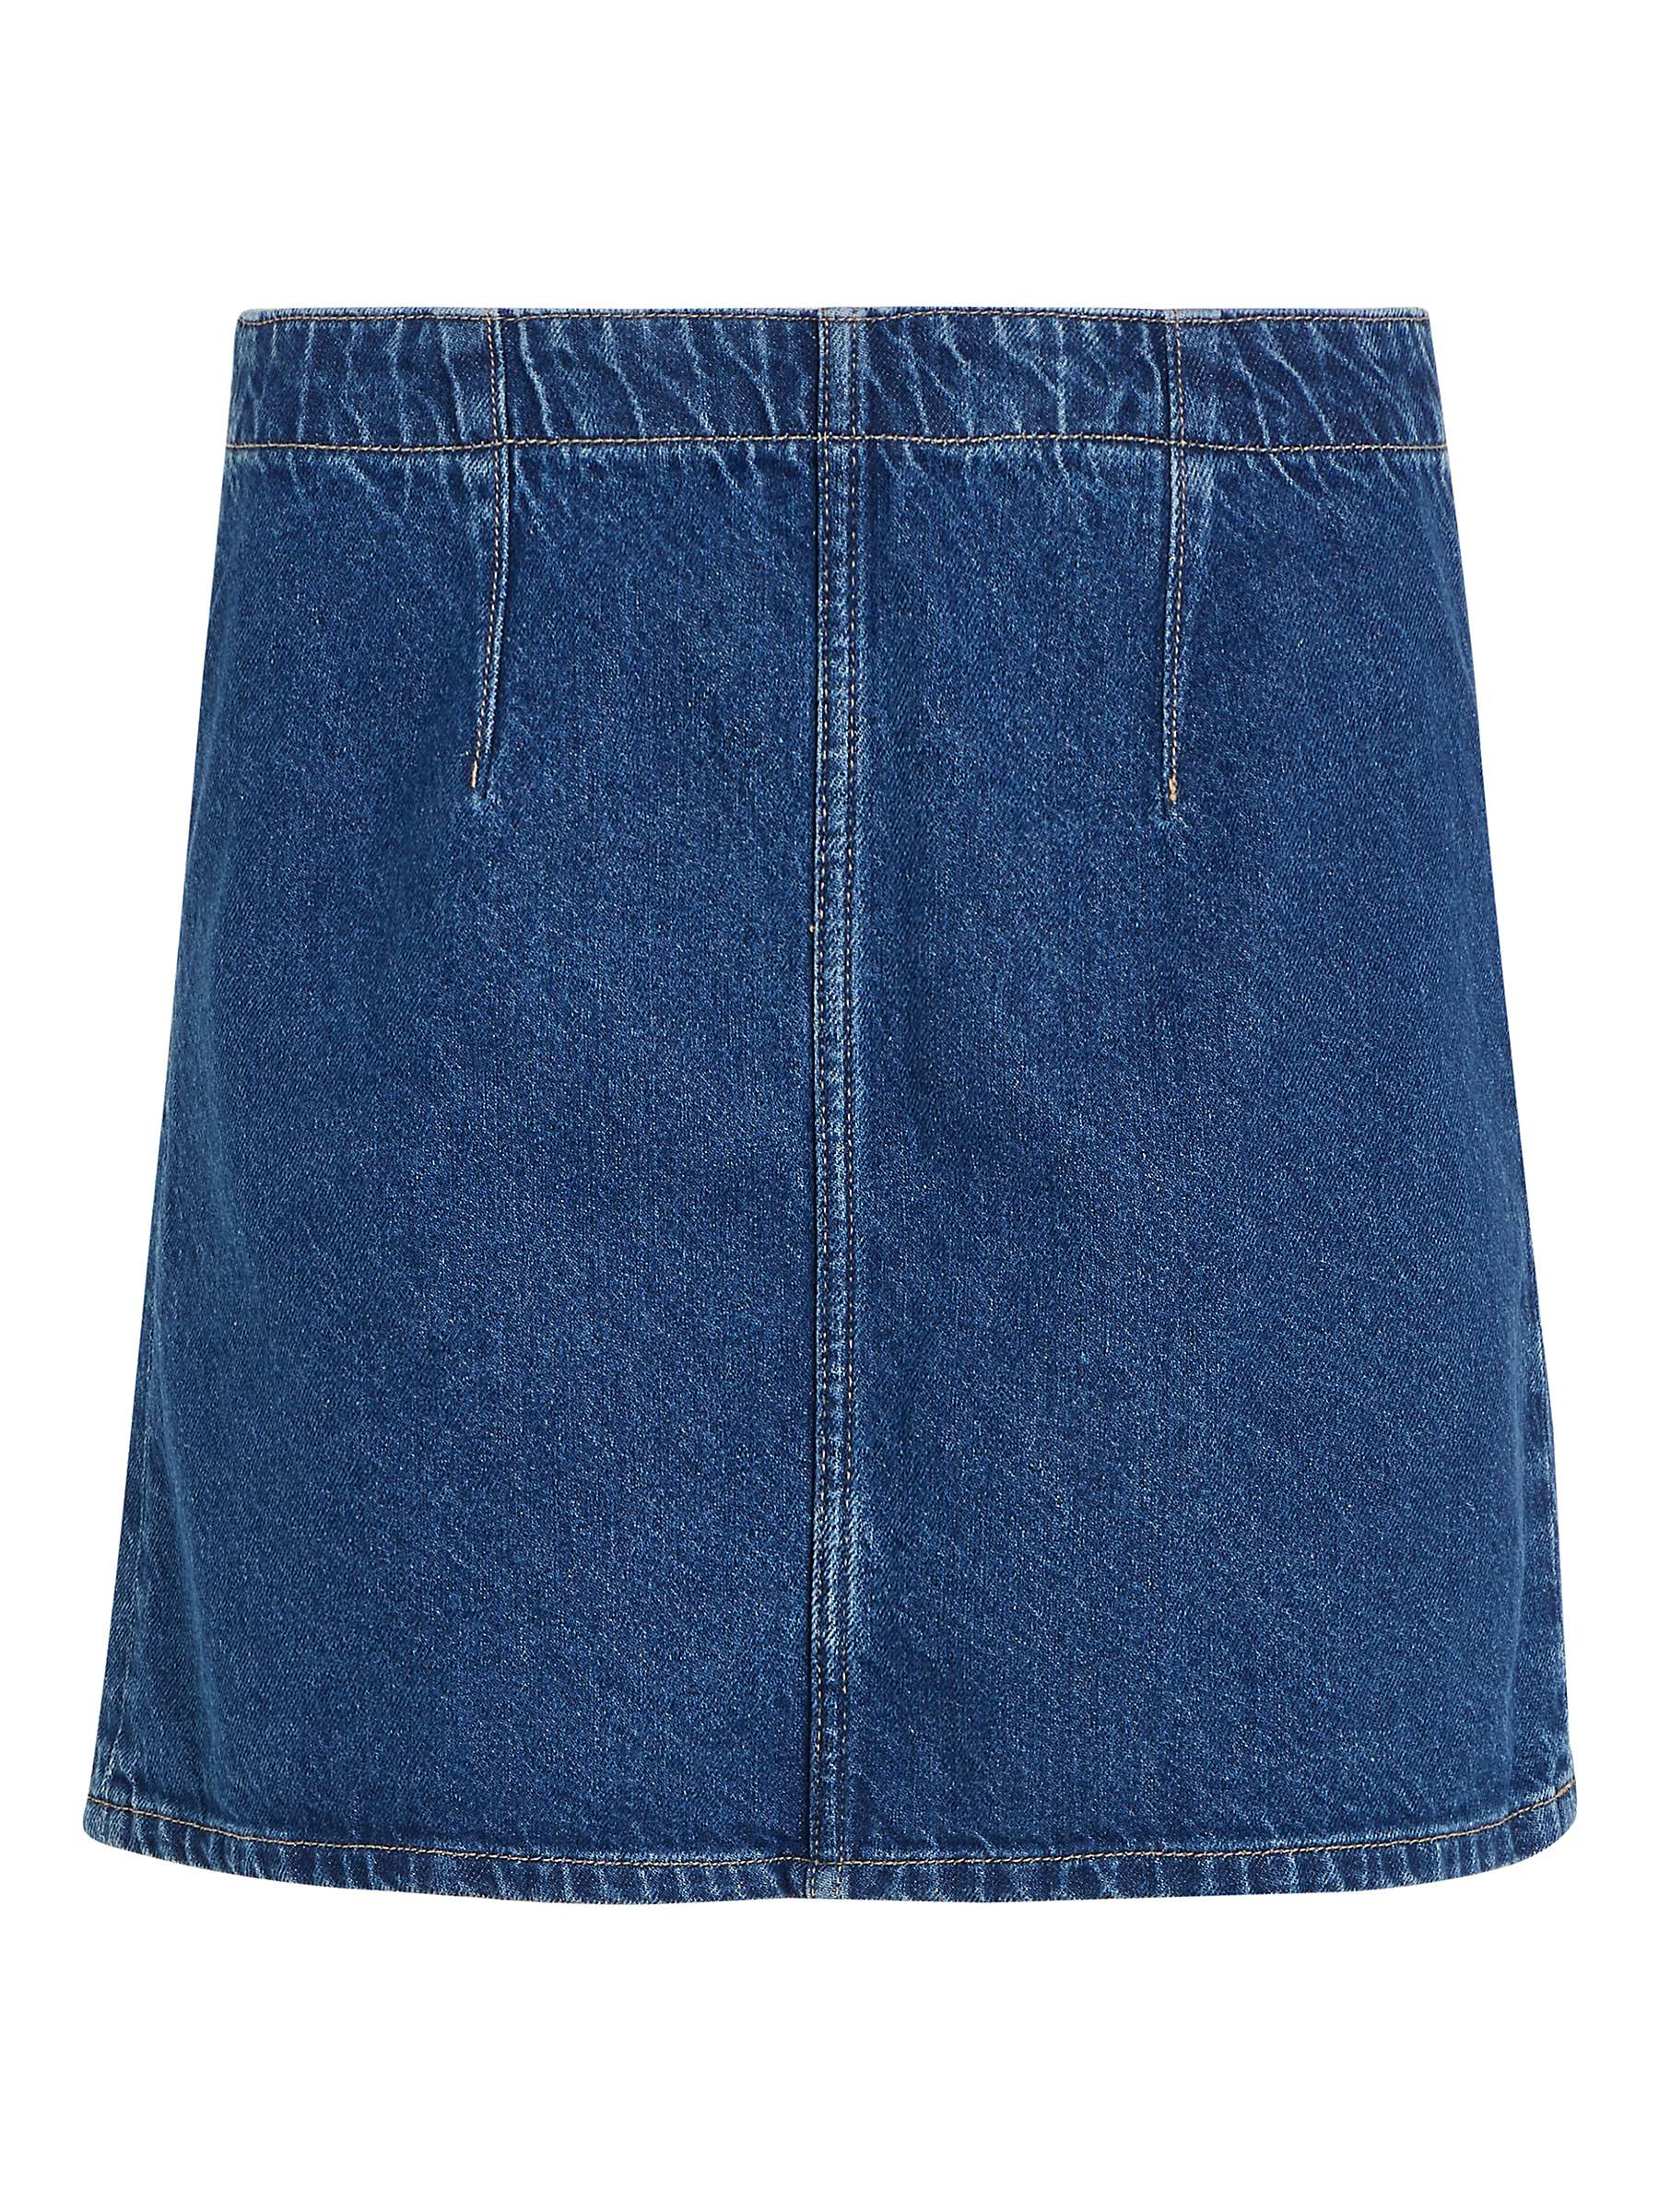 Buy Calvin Klein Denim Mini Skirt, Medium Blue Online at johnlewis.com